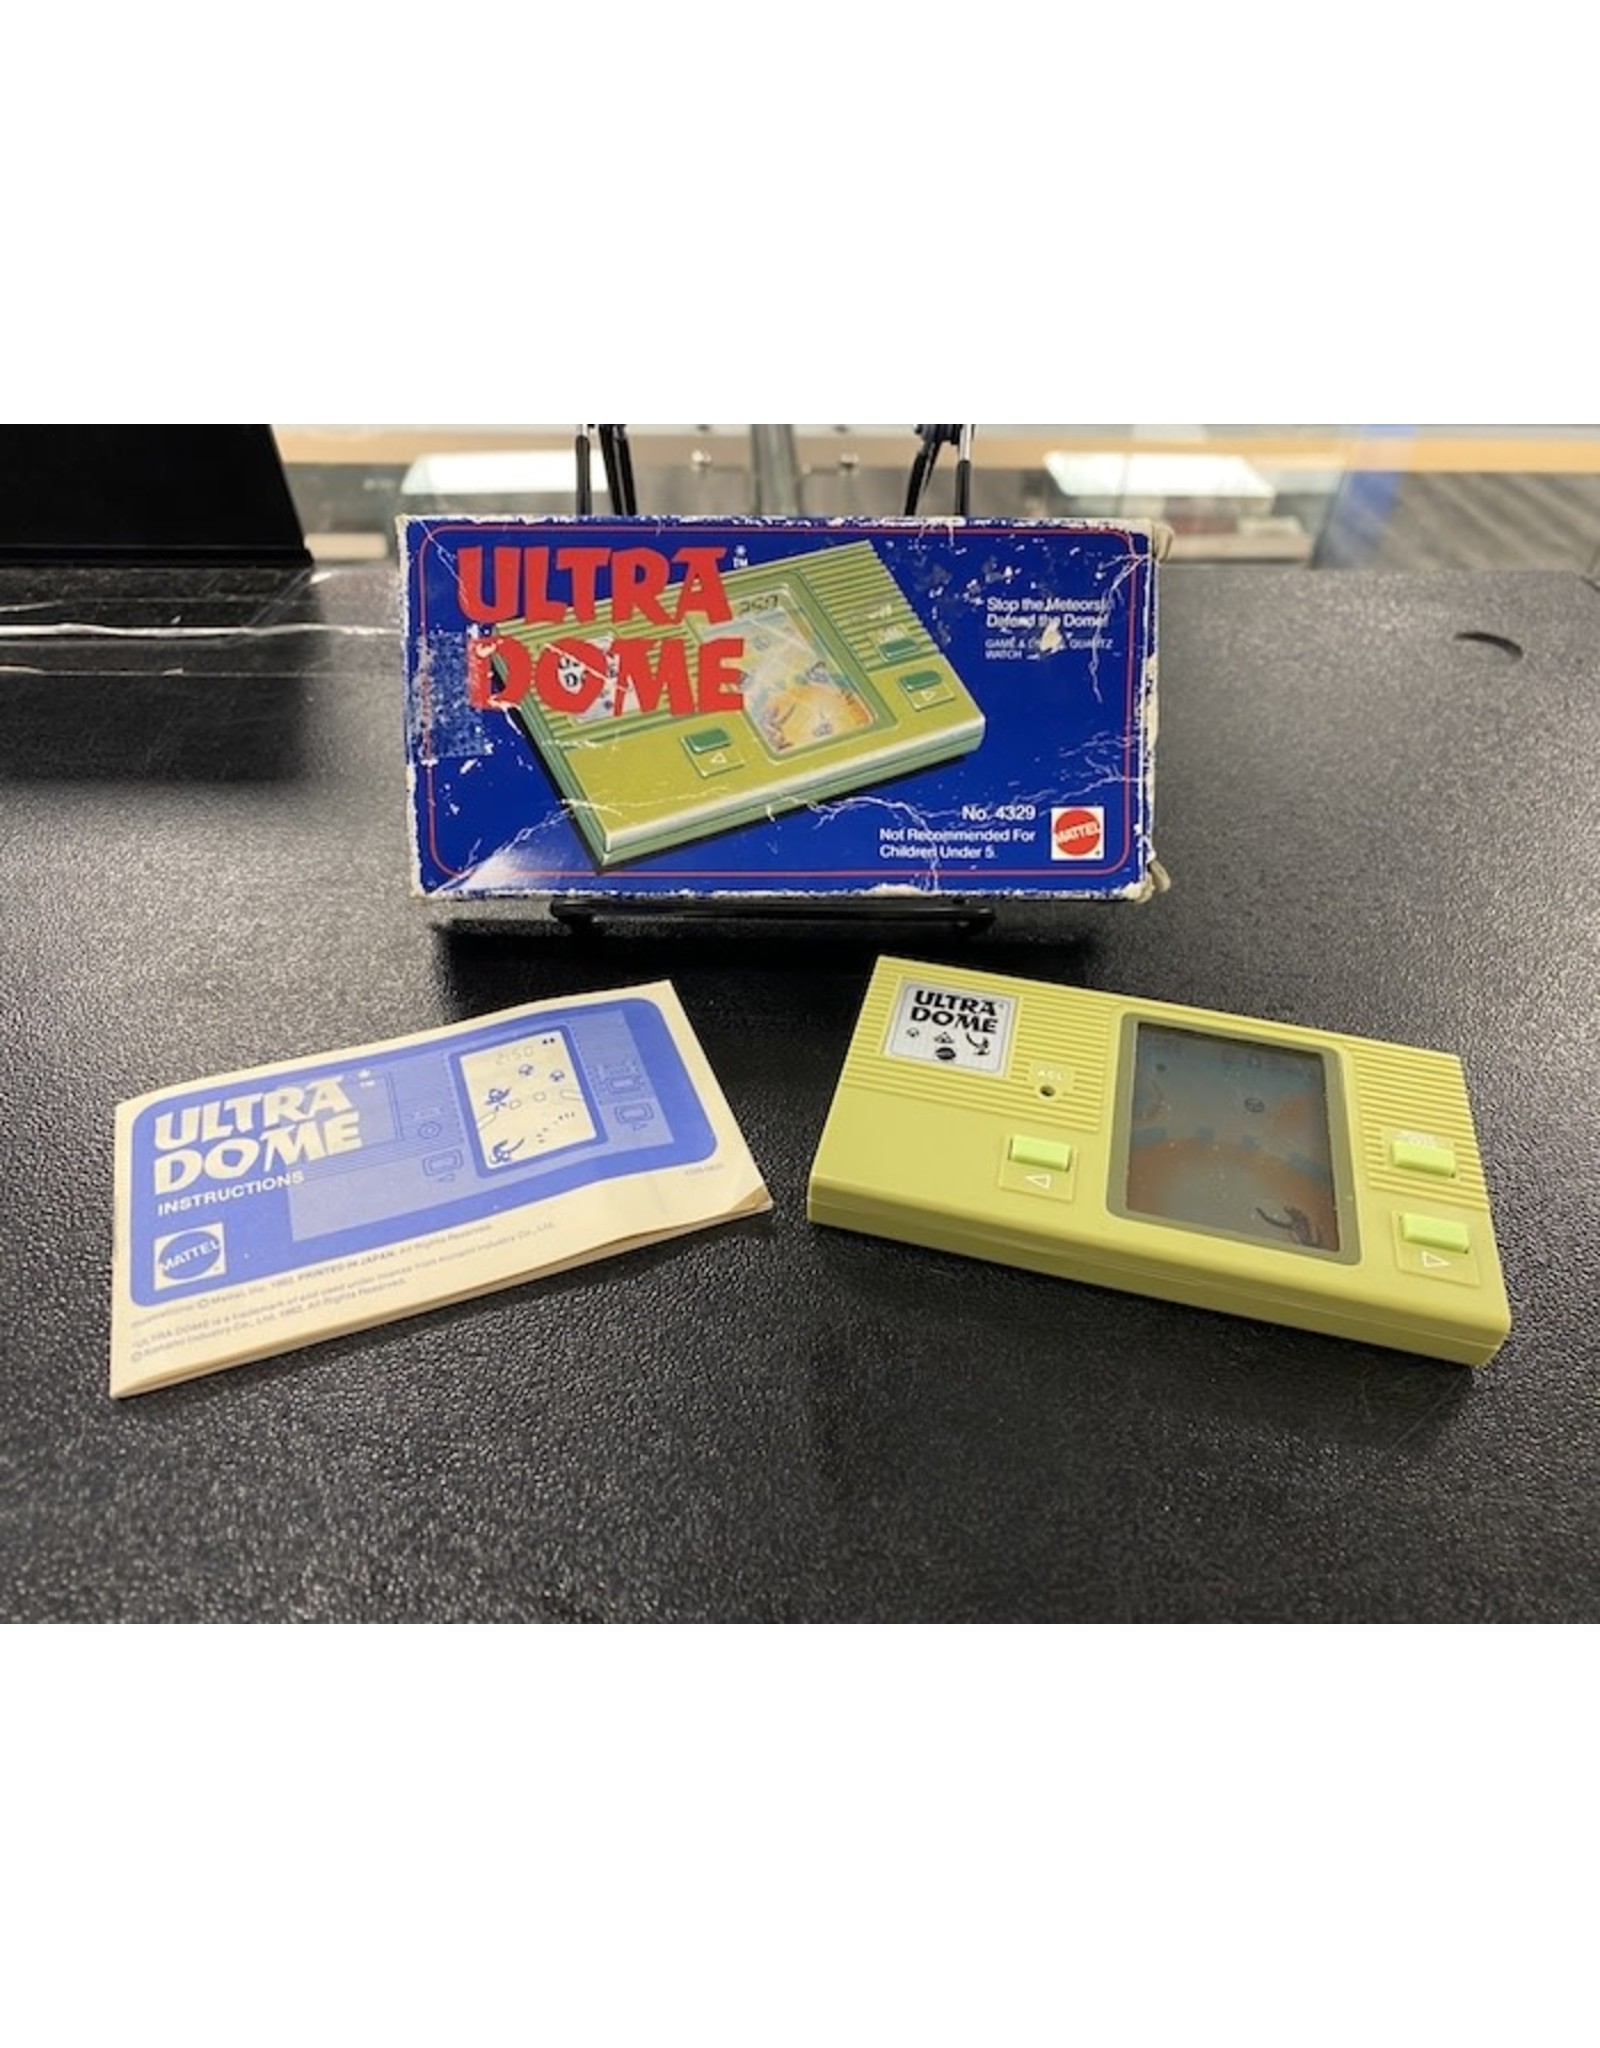 80's retro Ultra Dome (Mattel Handheld Game, CiB, Damaged Box)